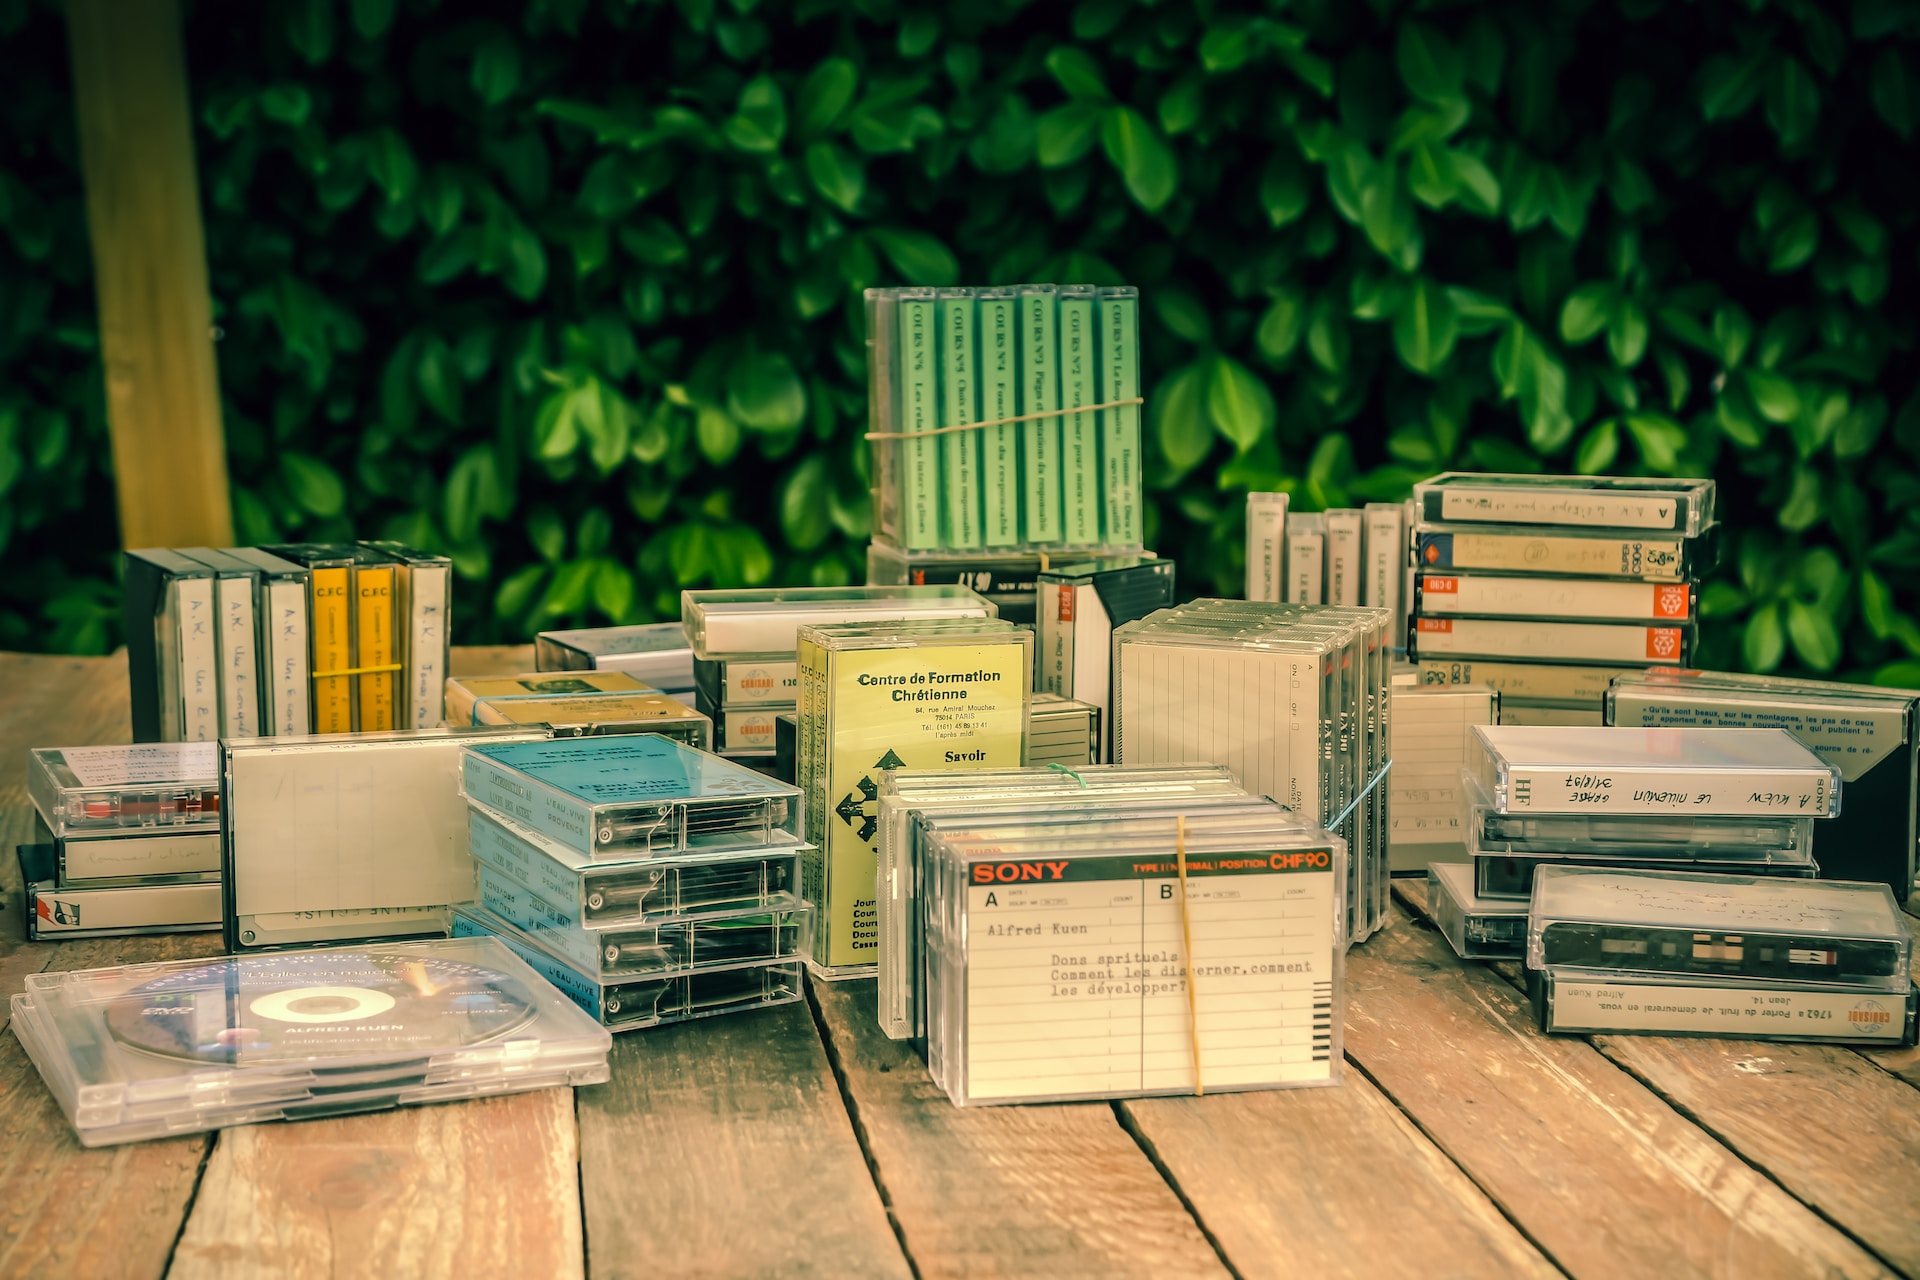 Cassette collection. Photo by Jametlene Reskp.